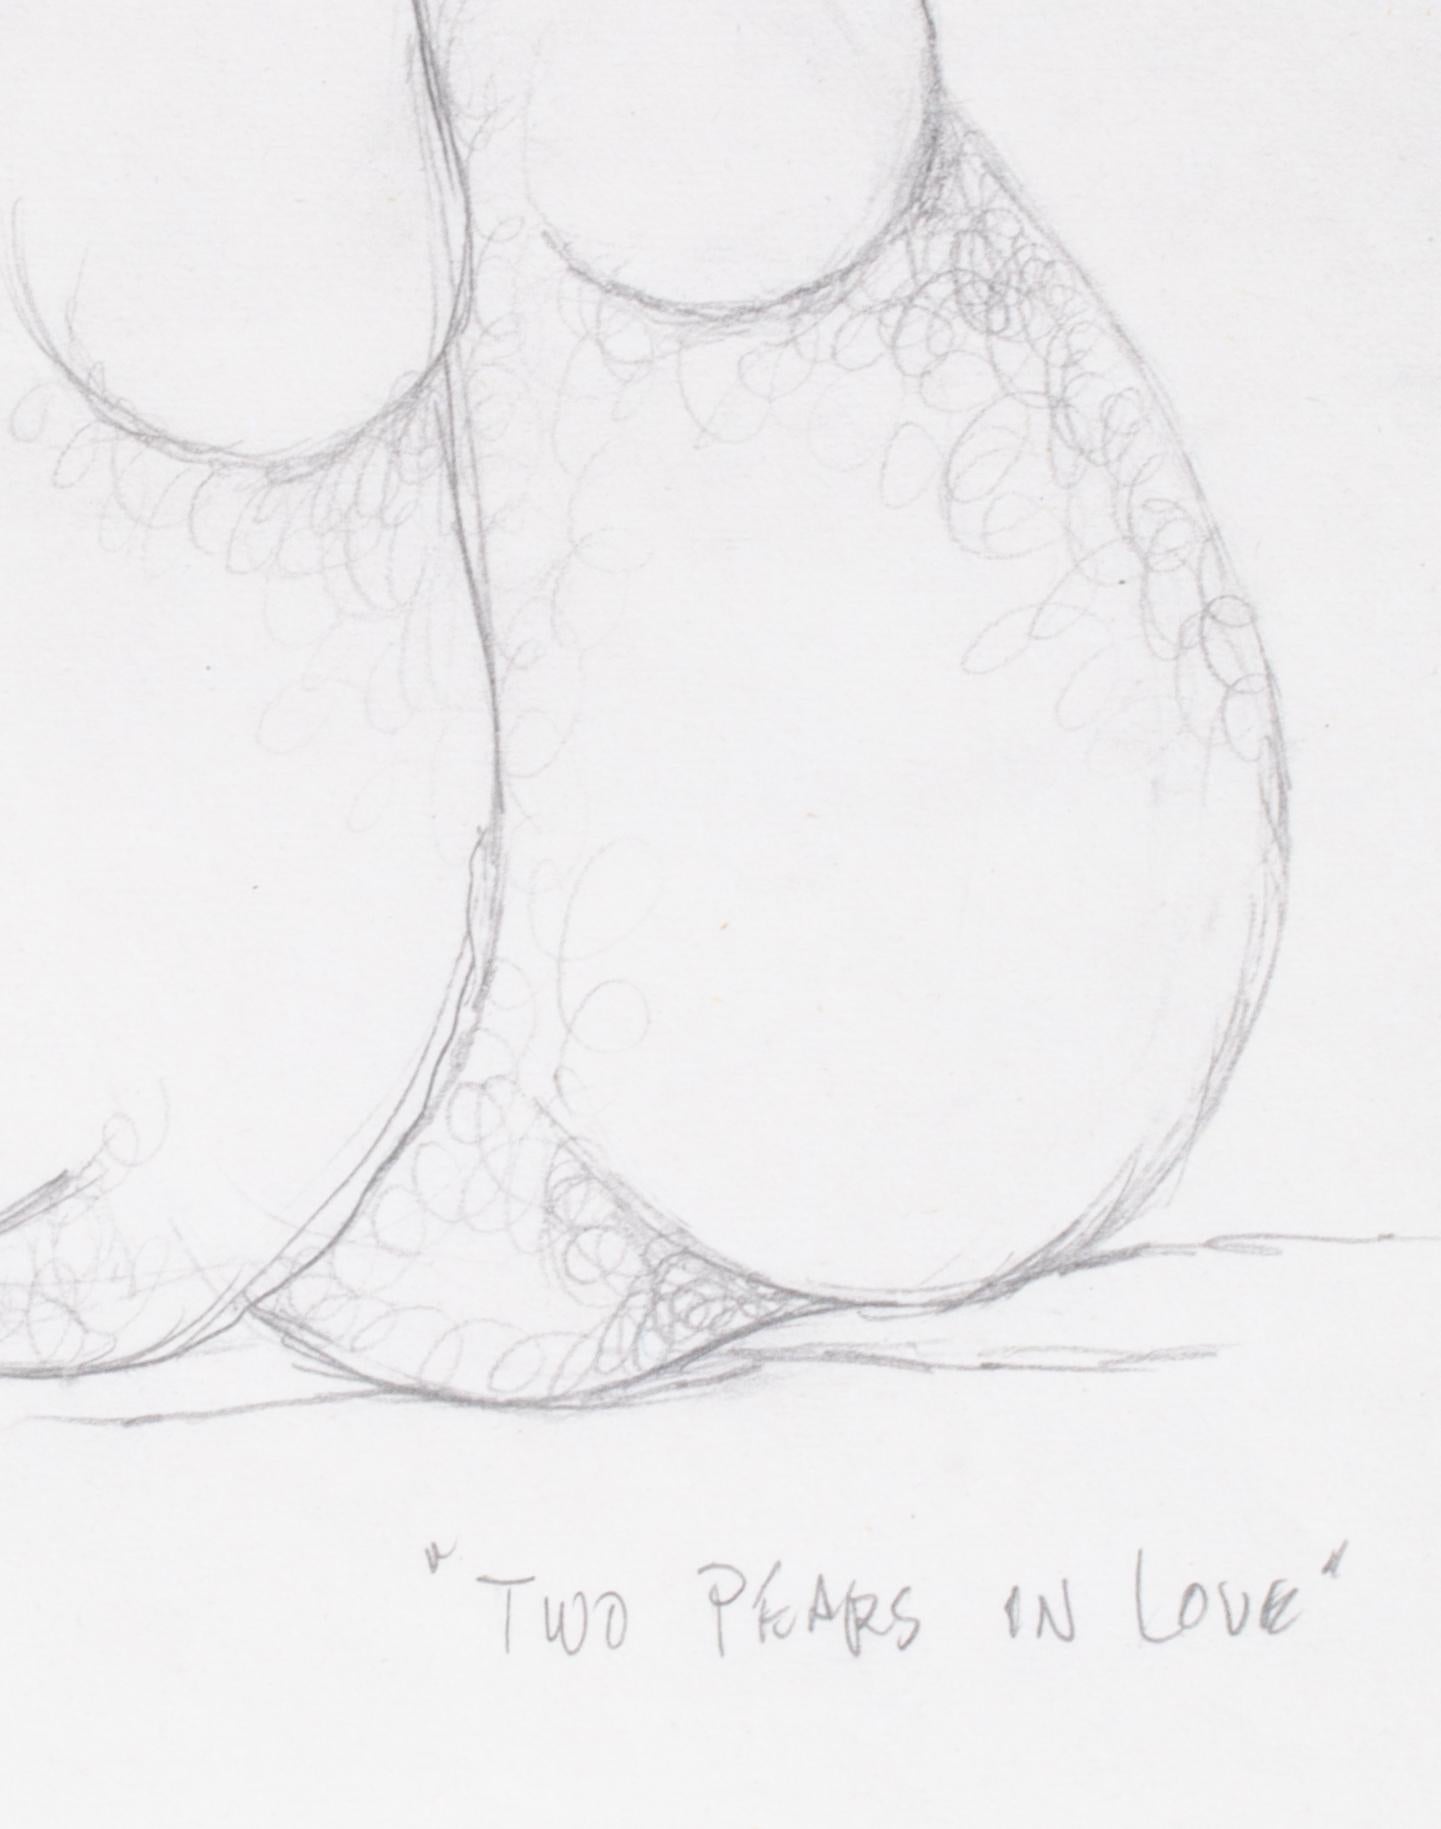 SACHA (Amerikaner, geb. 1965)
Zwei verliebte Birnen, 2008
Bleistift auf Papier
20 x 16 Zoll.
Signiert unten links: Sacha 2008 NYC
Beschriftung unten rechts: 